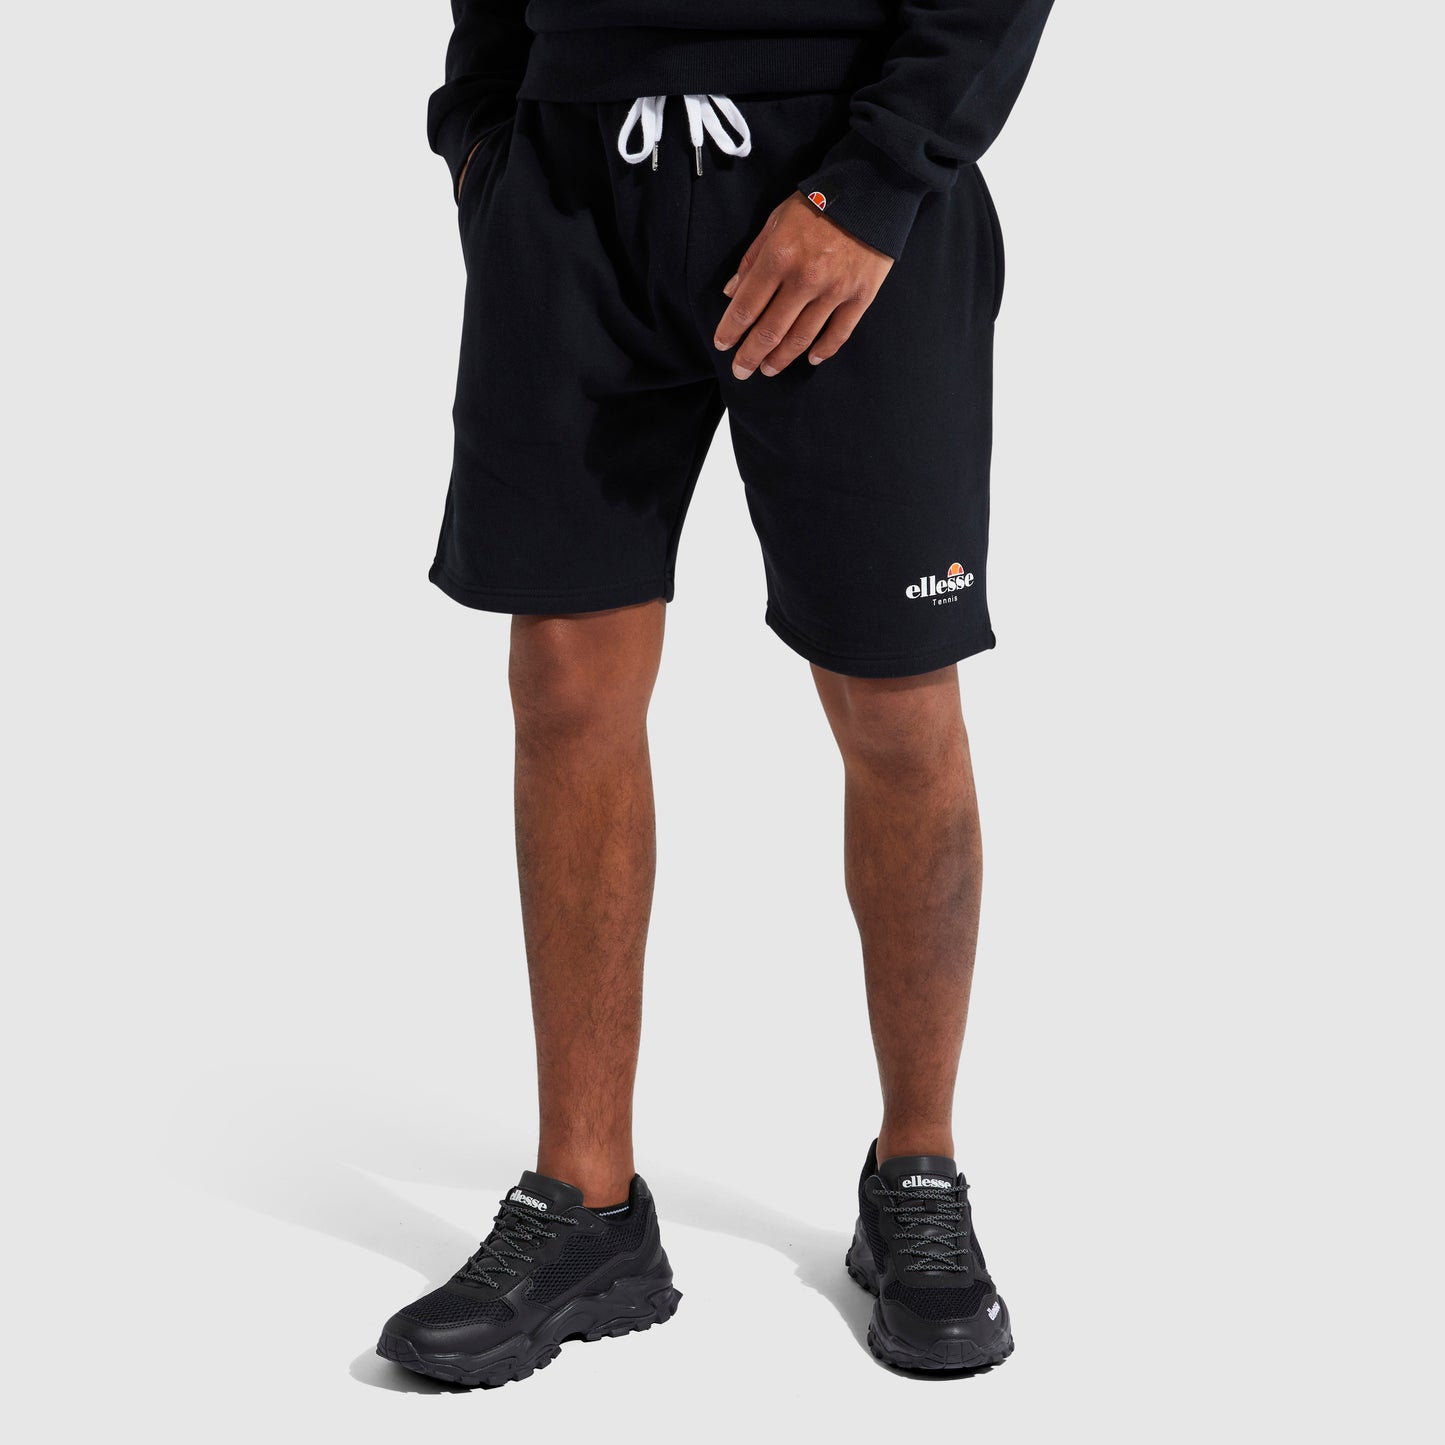 ellesse Brands Sweat – Tennis NewCo Men\'s Shorts